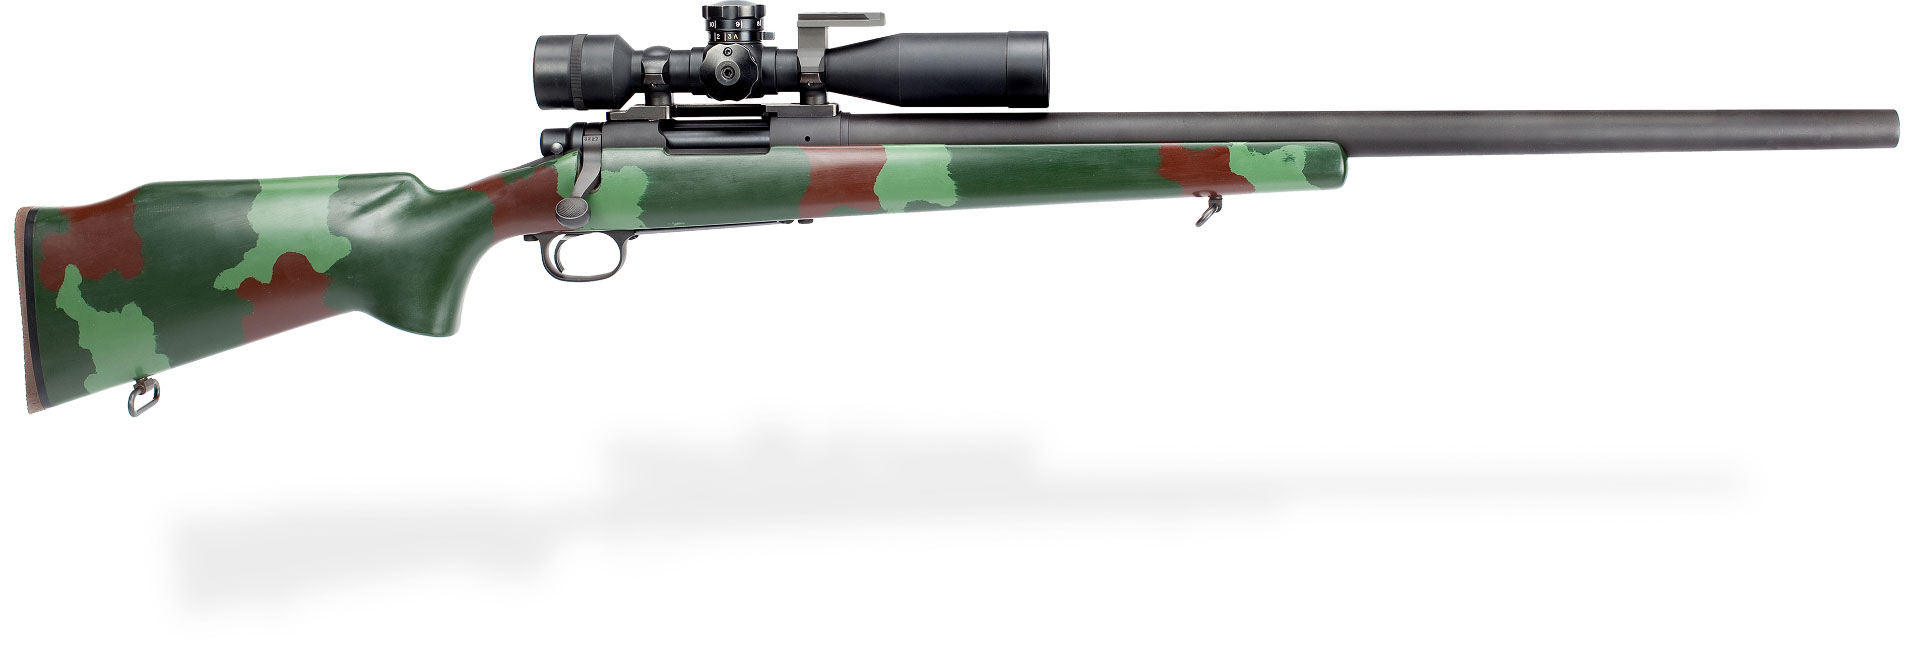 M40 A1 Sniper Rifle